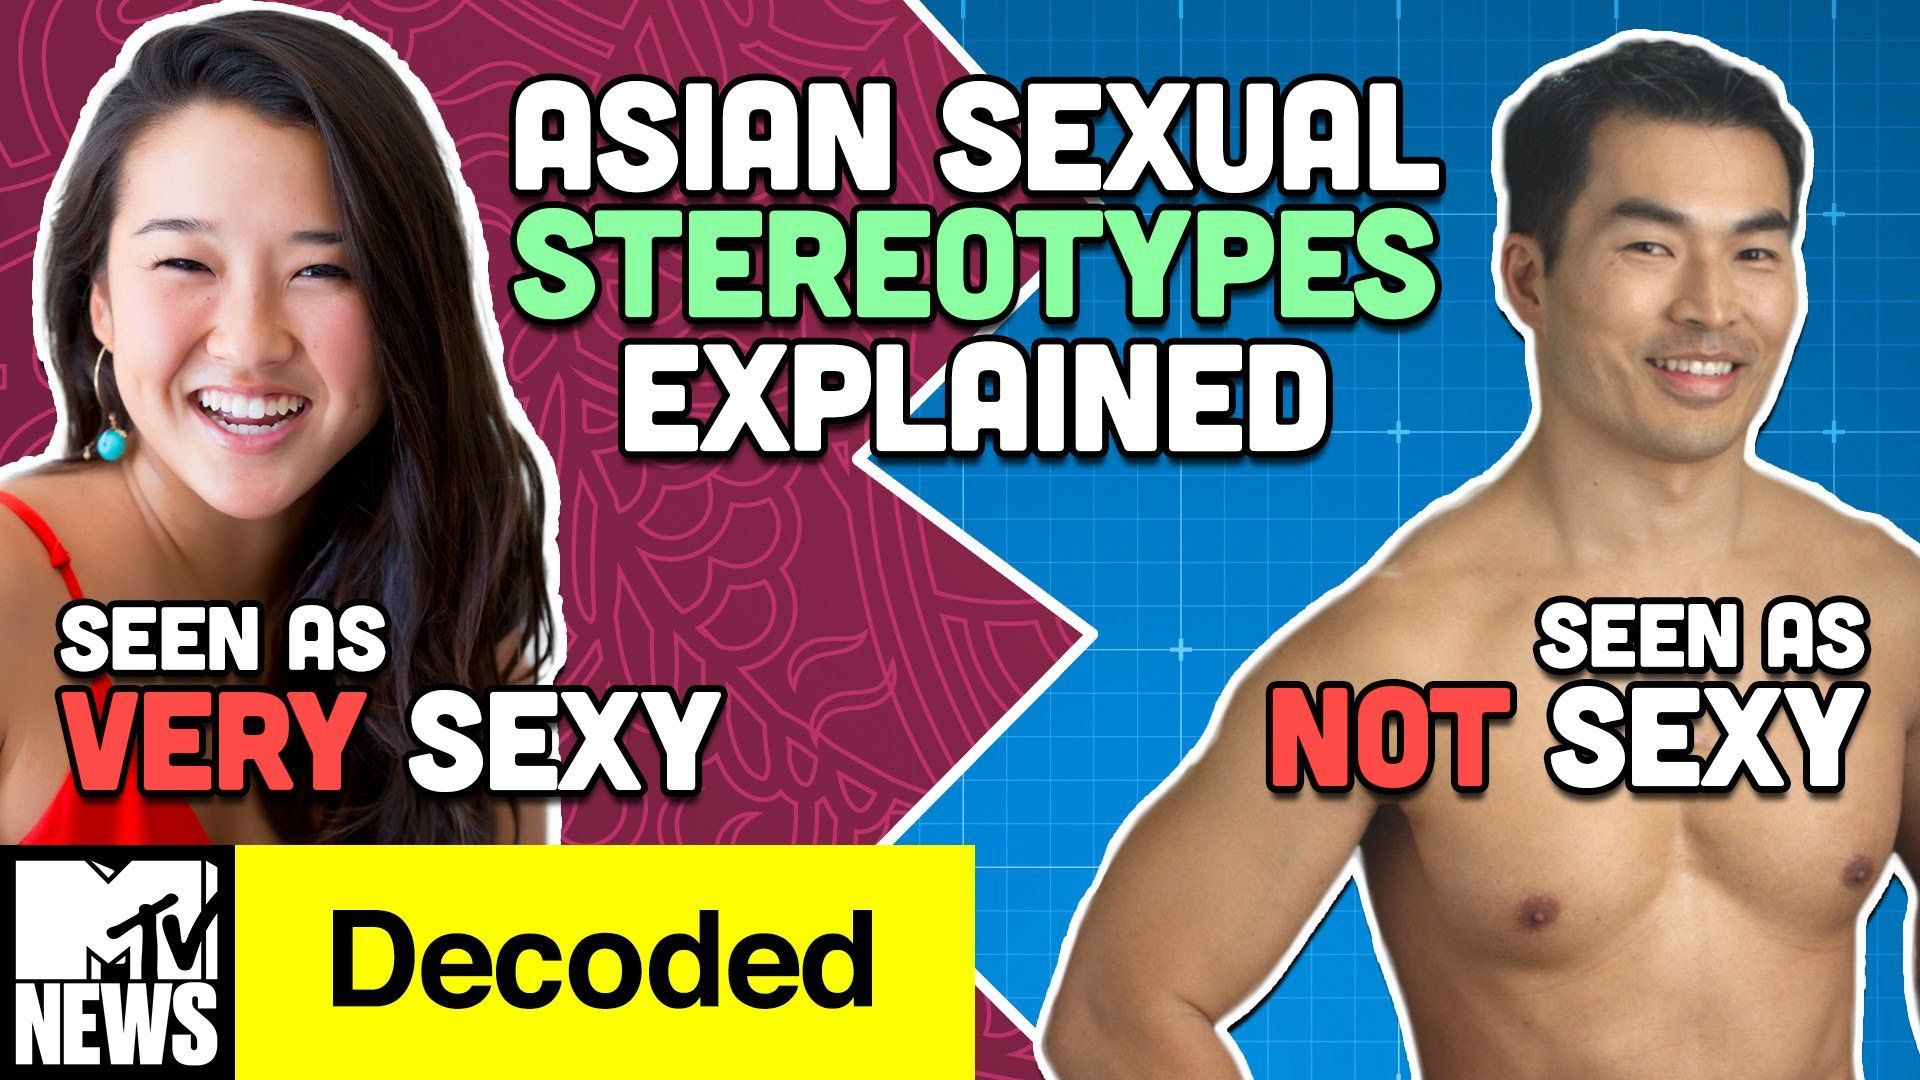 Asian perceptions of americans